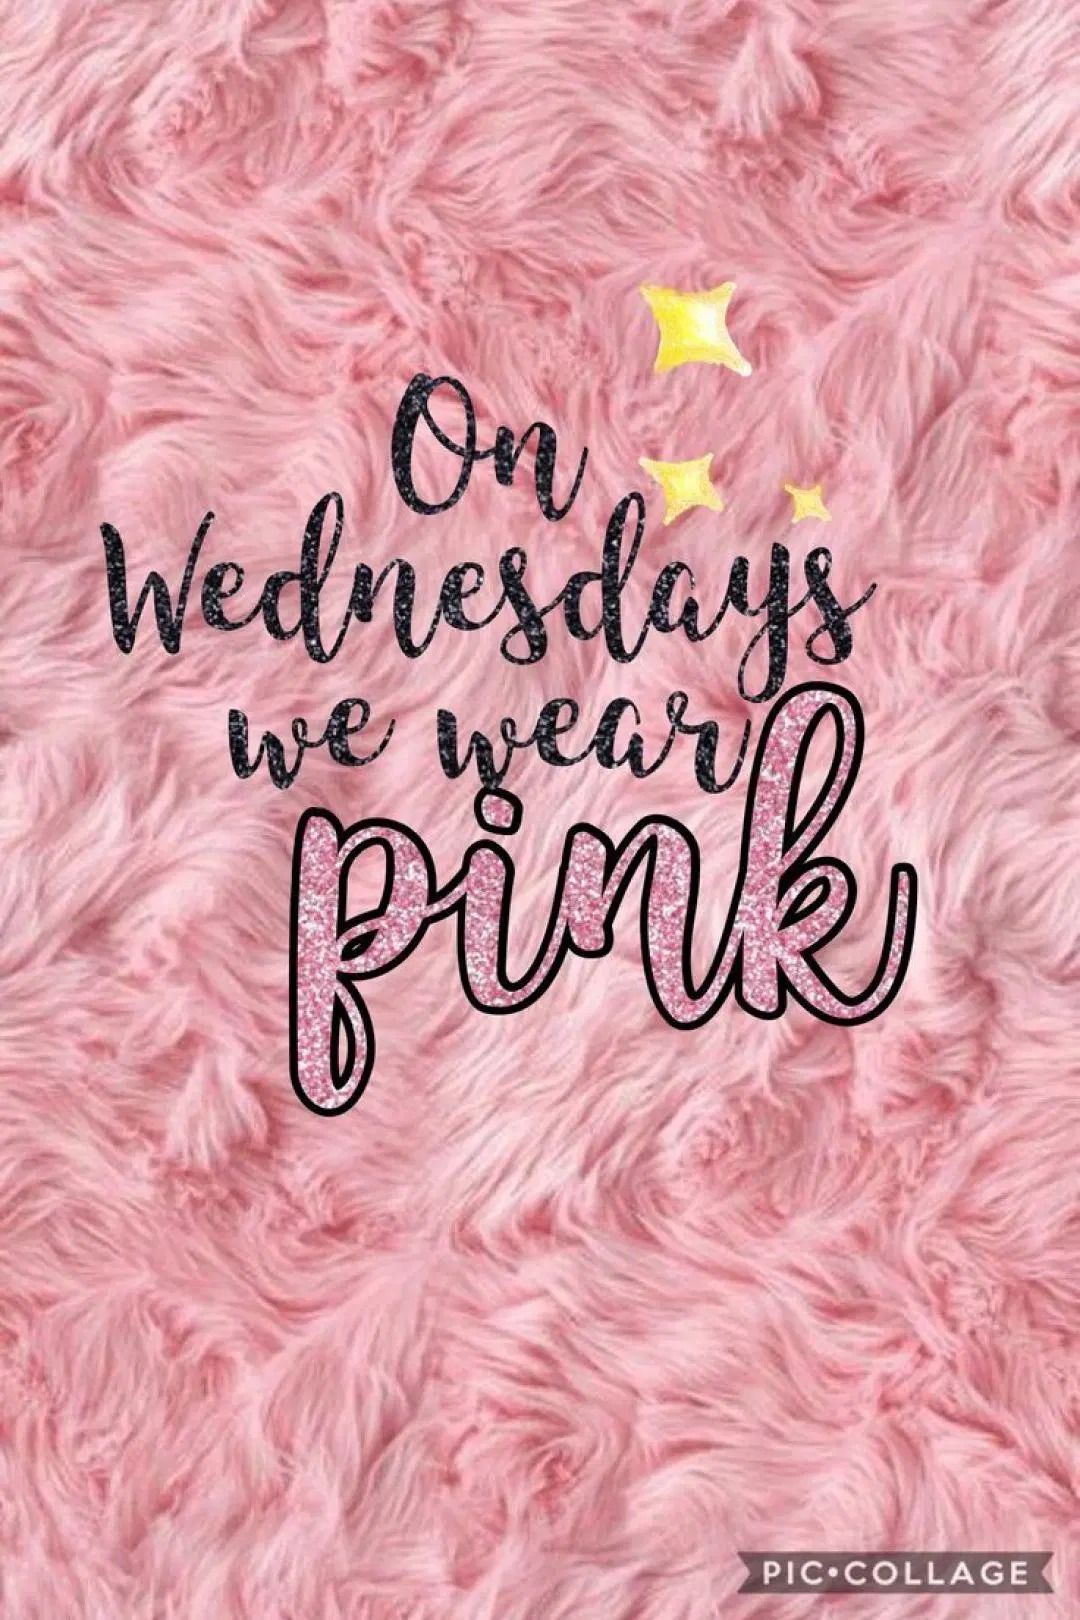 On Wednesdays we wear pink Blank Meme Template